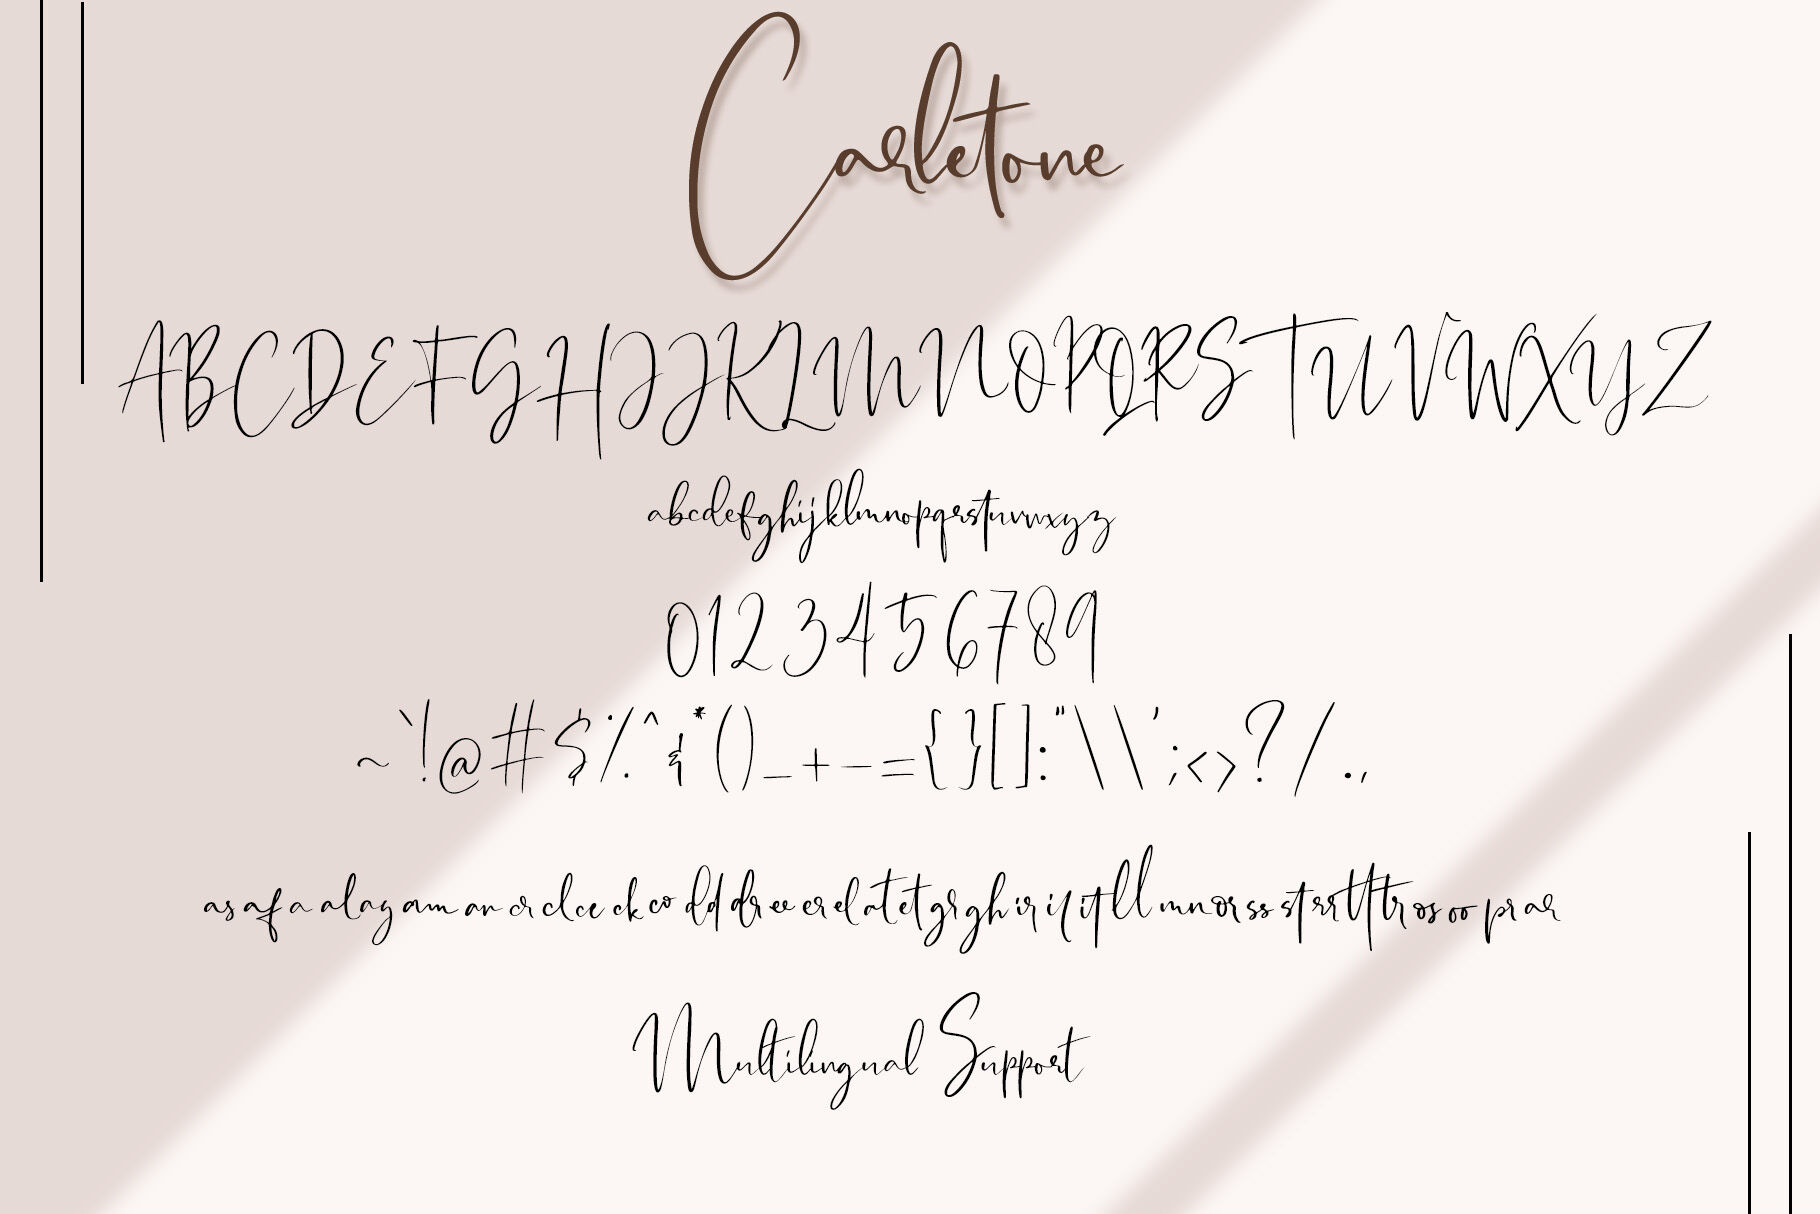 Carletone Classy Signature Font By Dmletter31 Thehungryjpeg Com